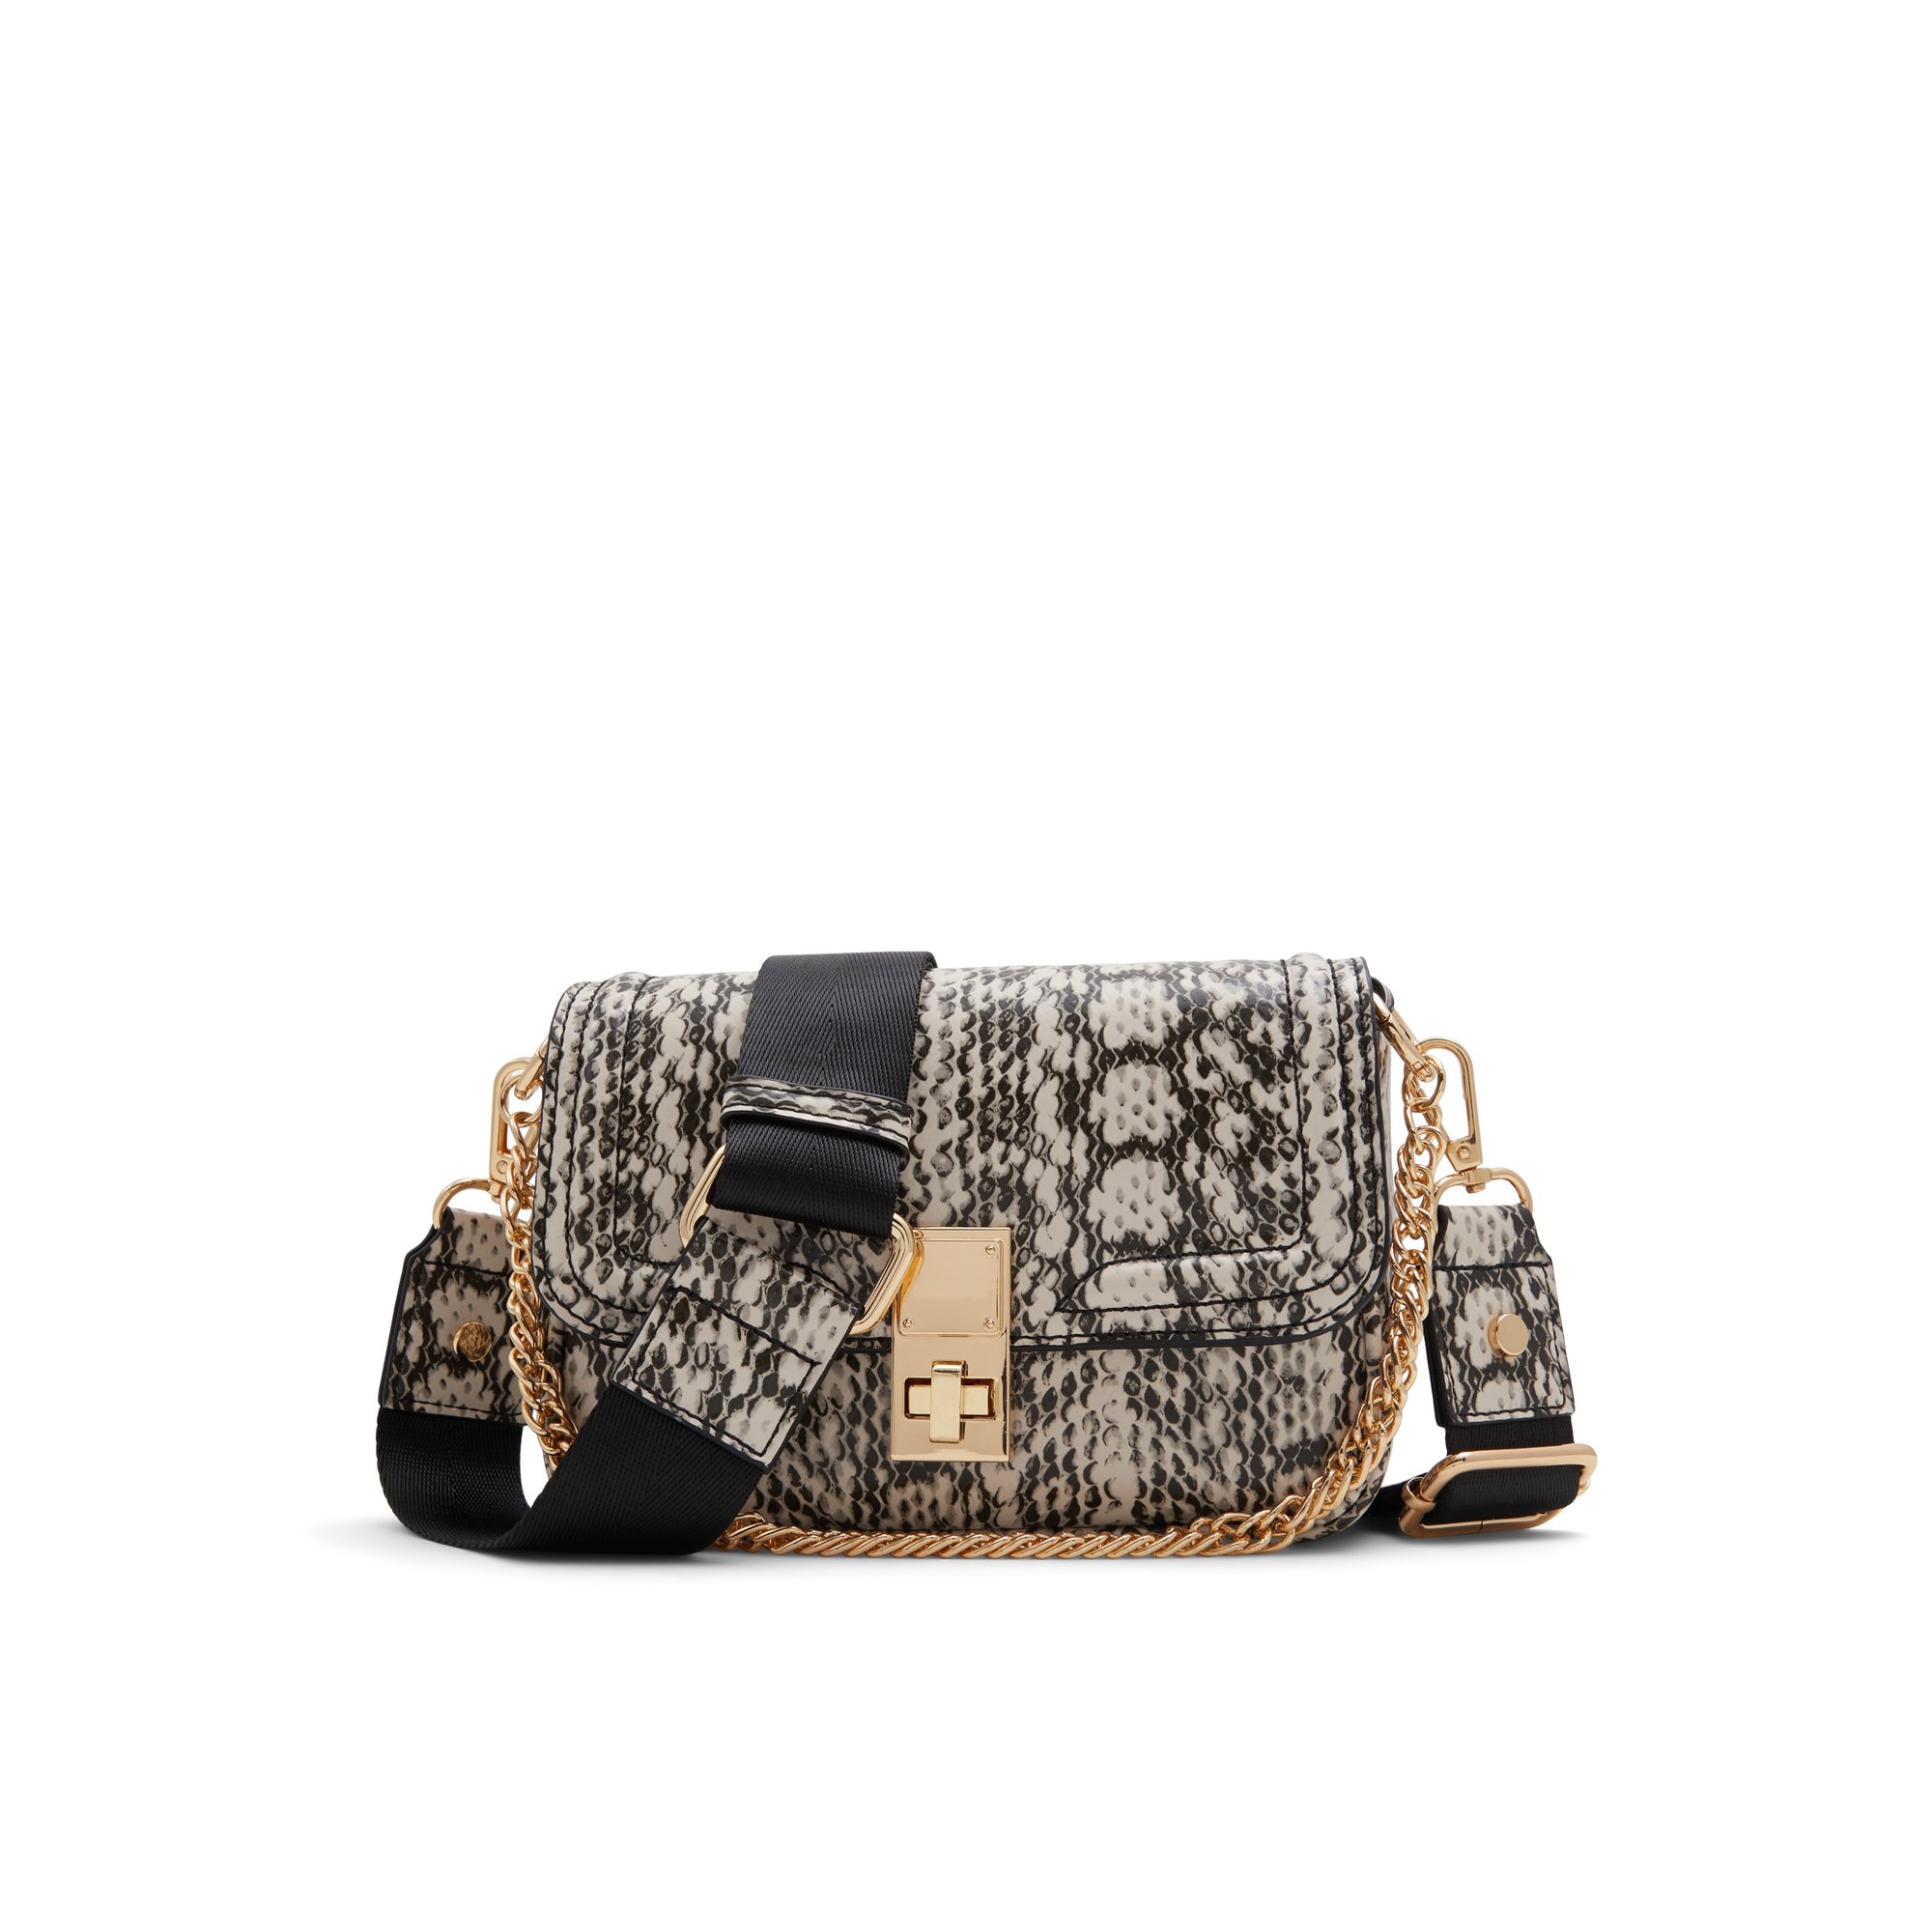 ALDO Johnax - Women's Handbags Crossbody - Black